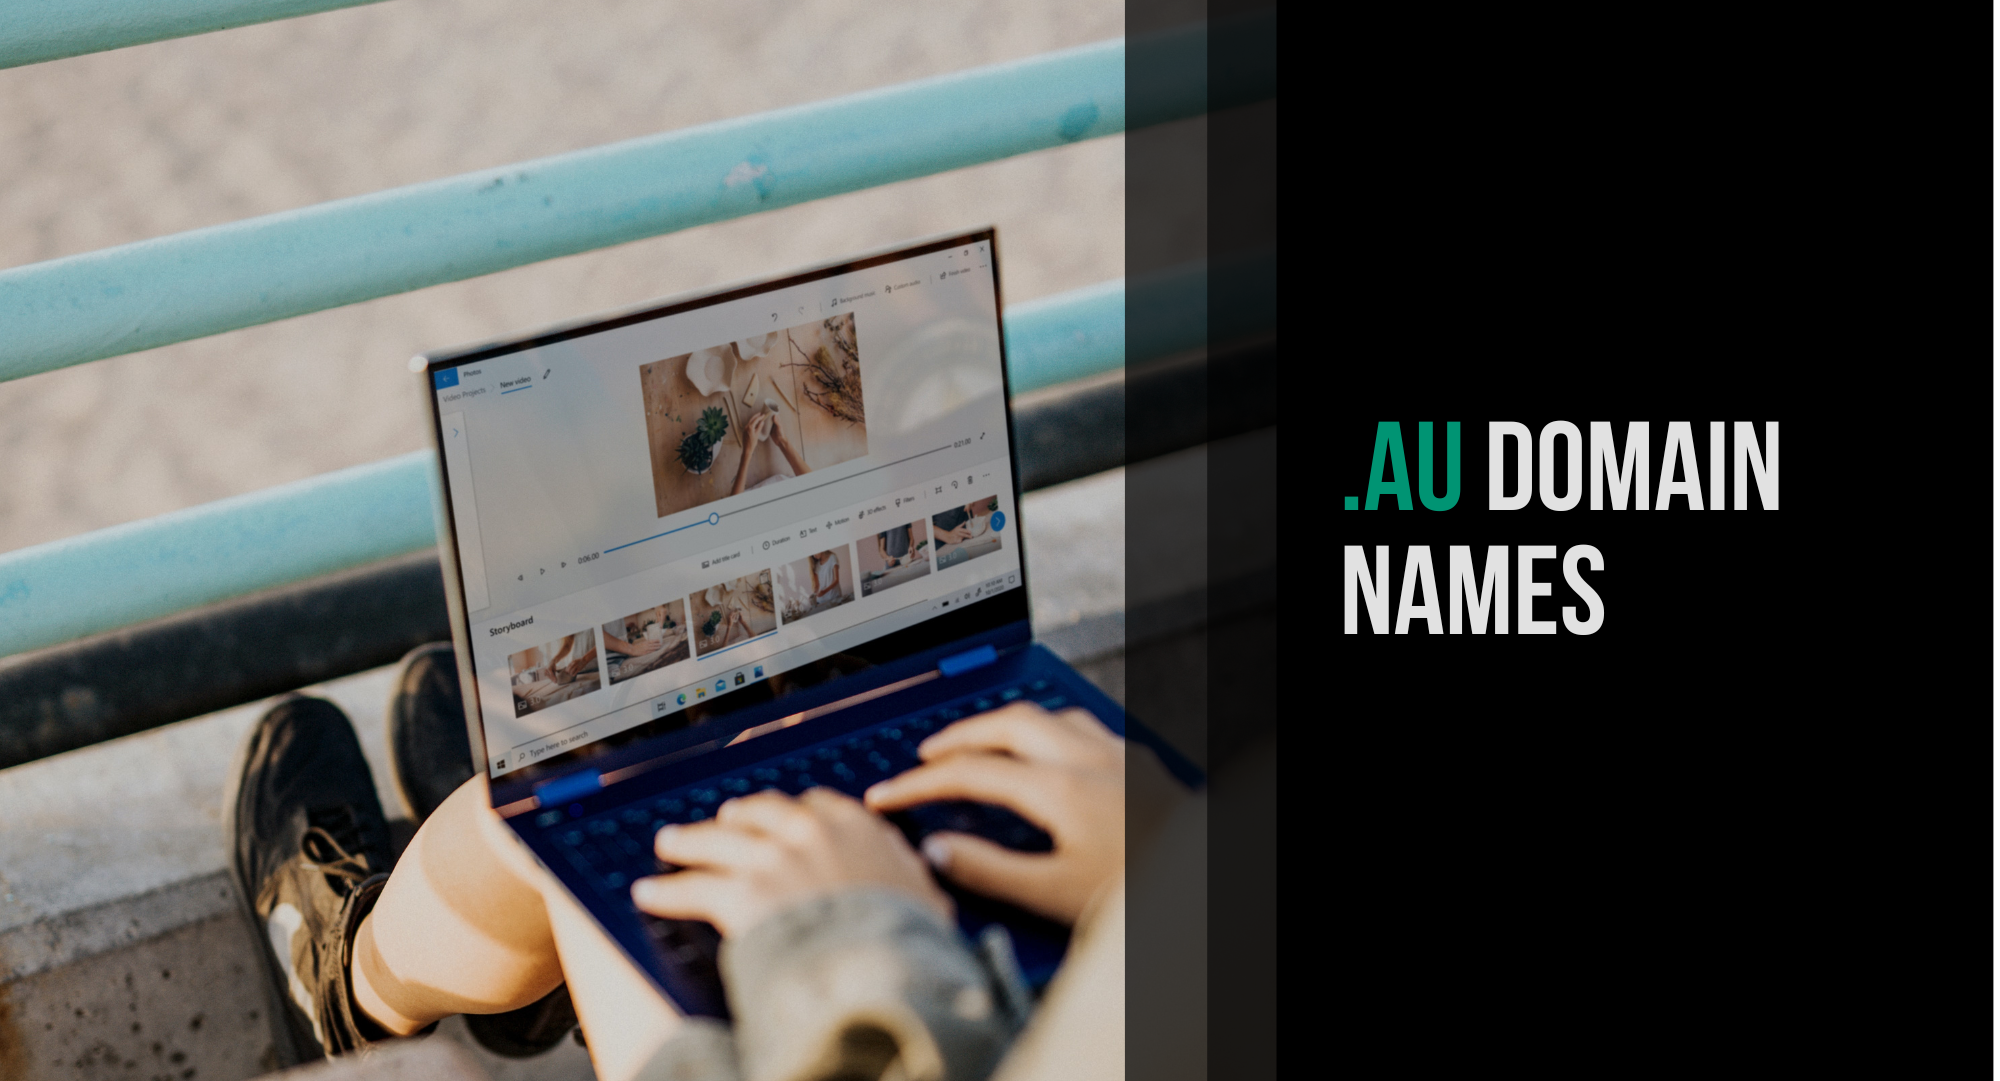 .Au domain names